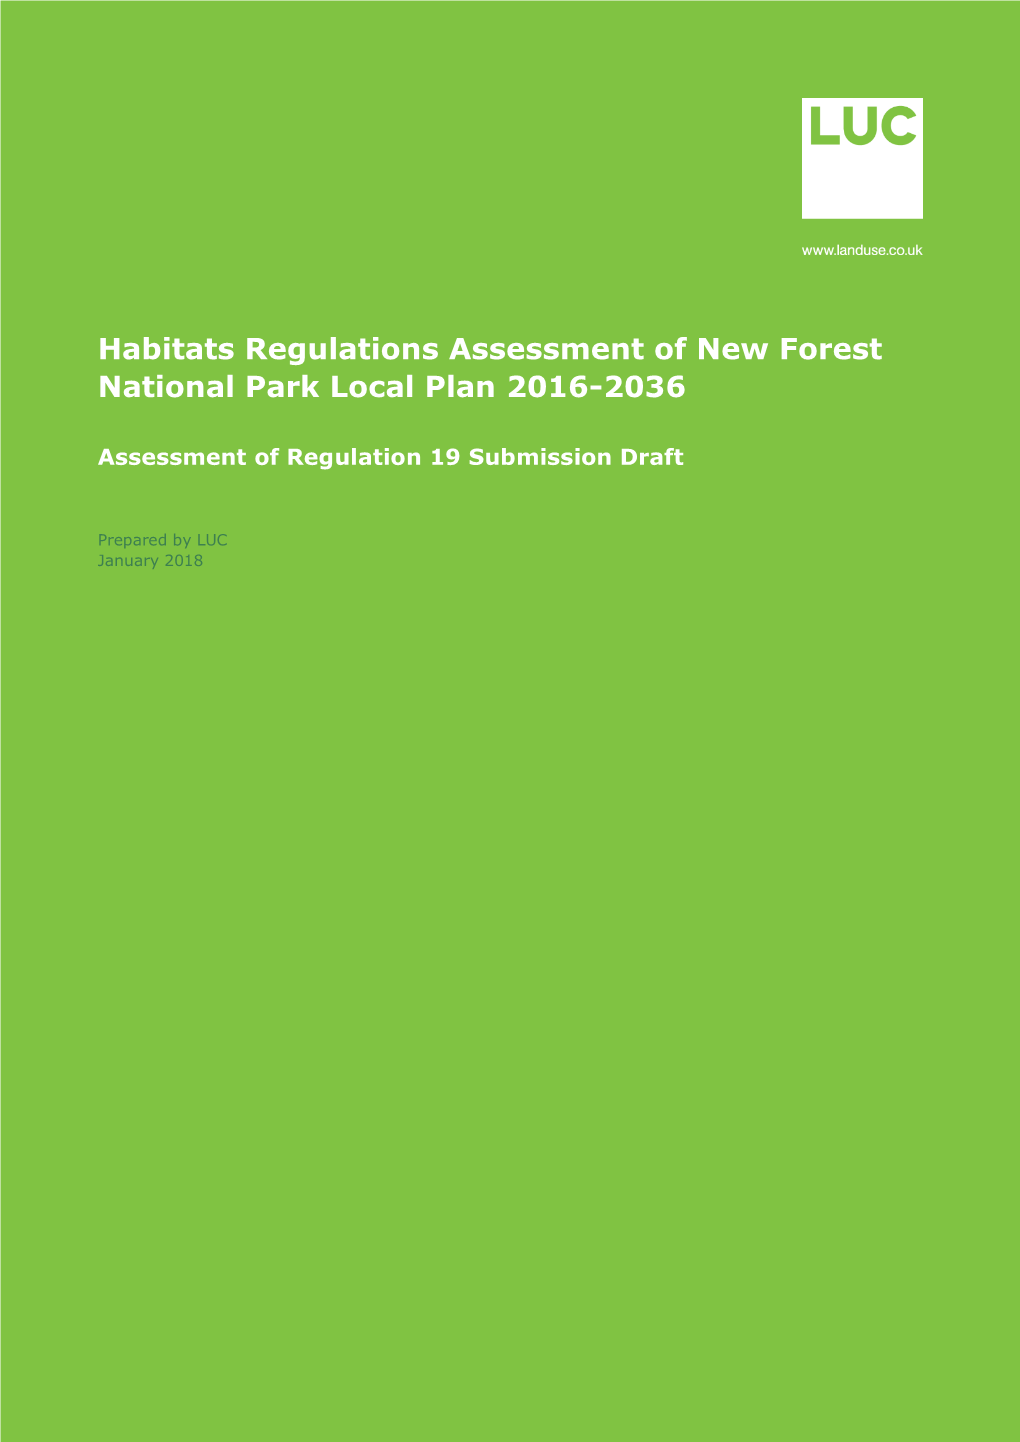 Habitats Regulations Assessment of New Forest National Park Local Plan 2016-2036